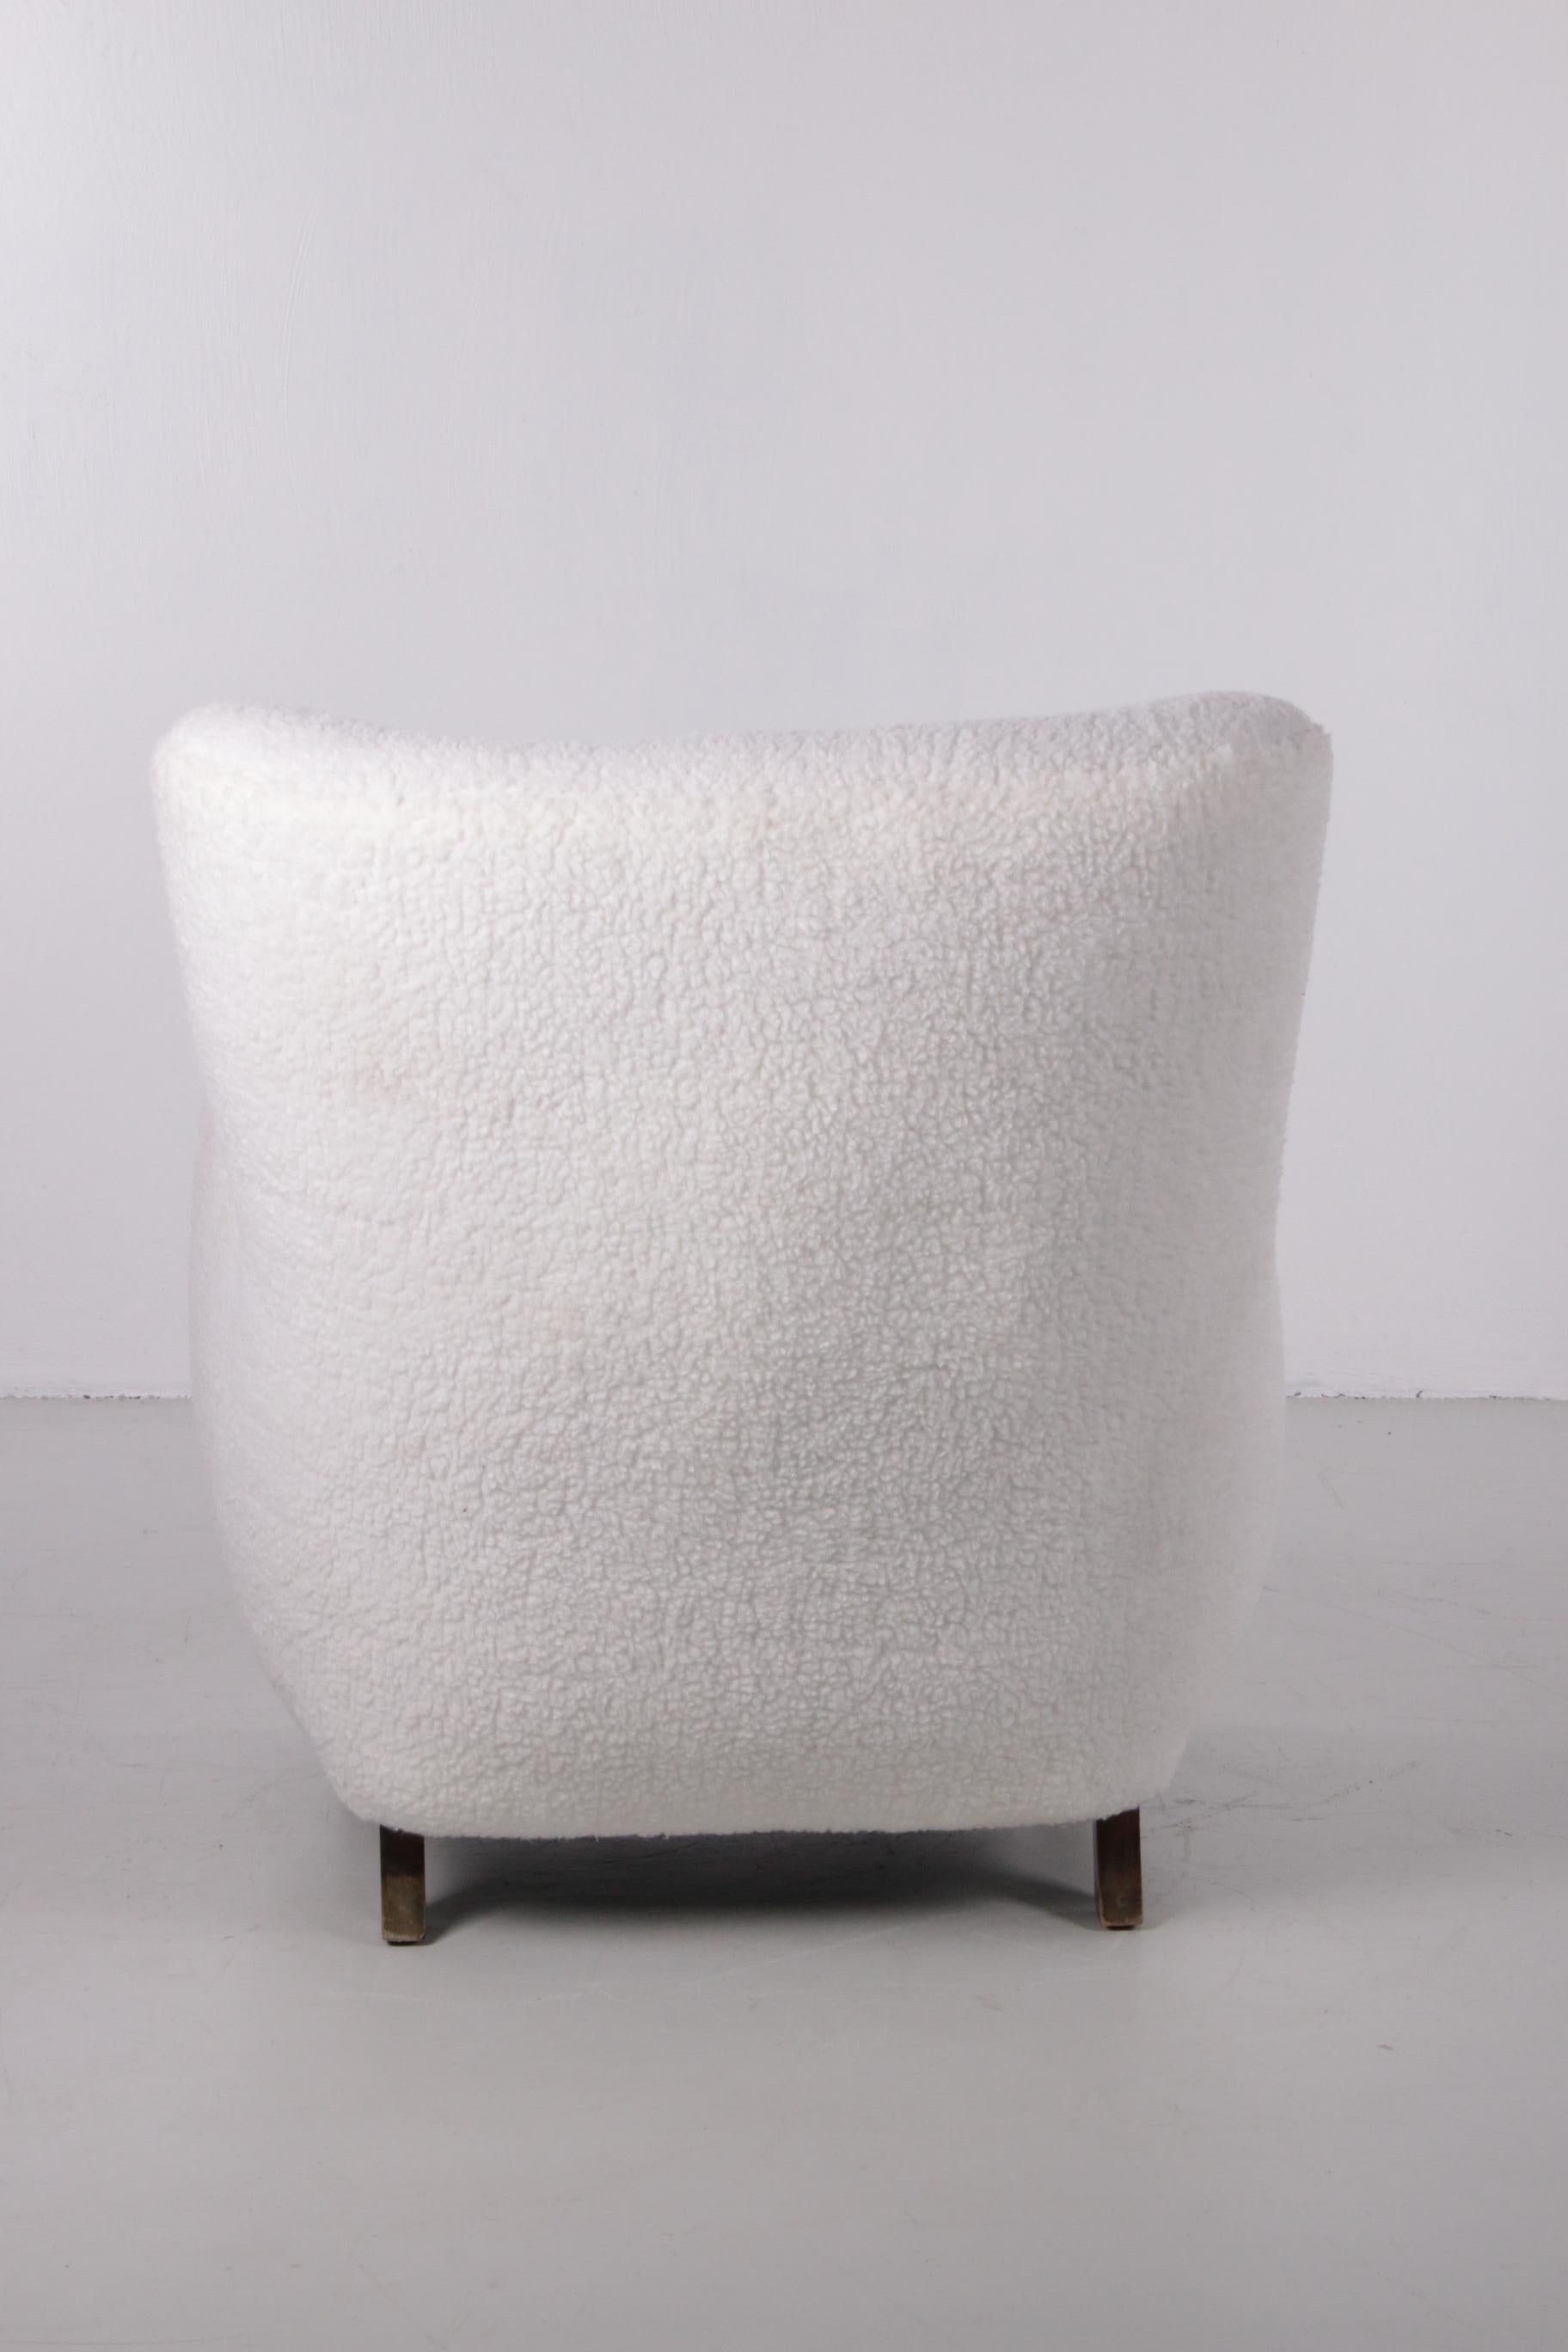 Wool Fritz Hansen High Back Lounge Chair, Model 1669, Denmark, 1950